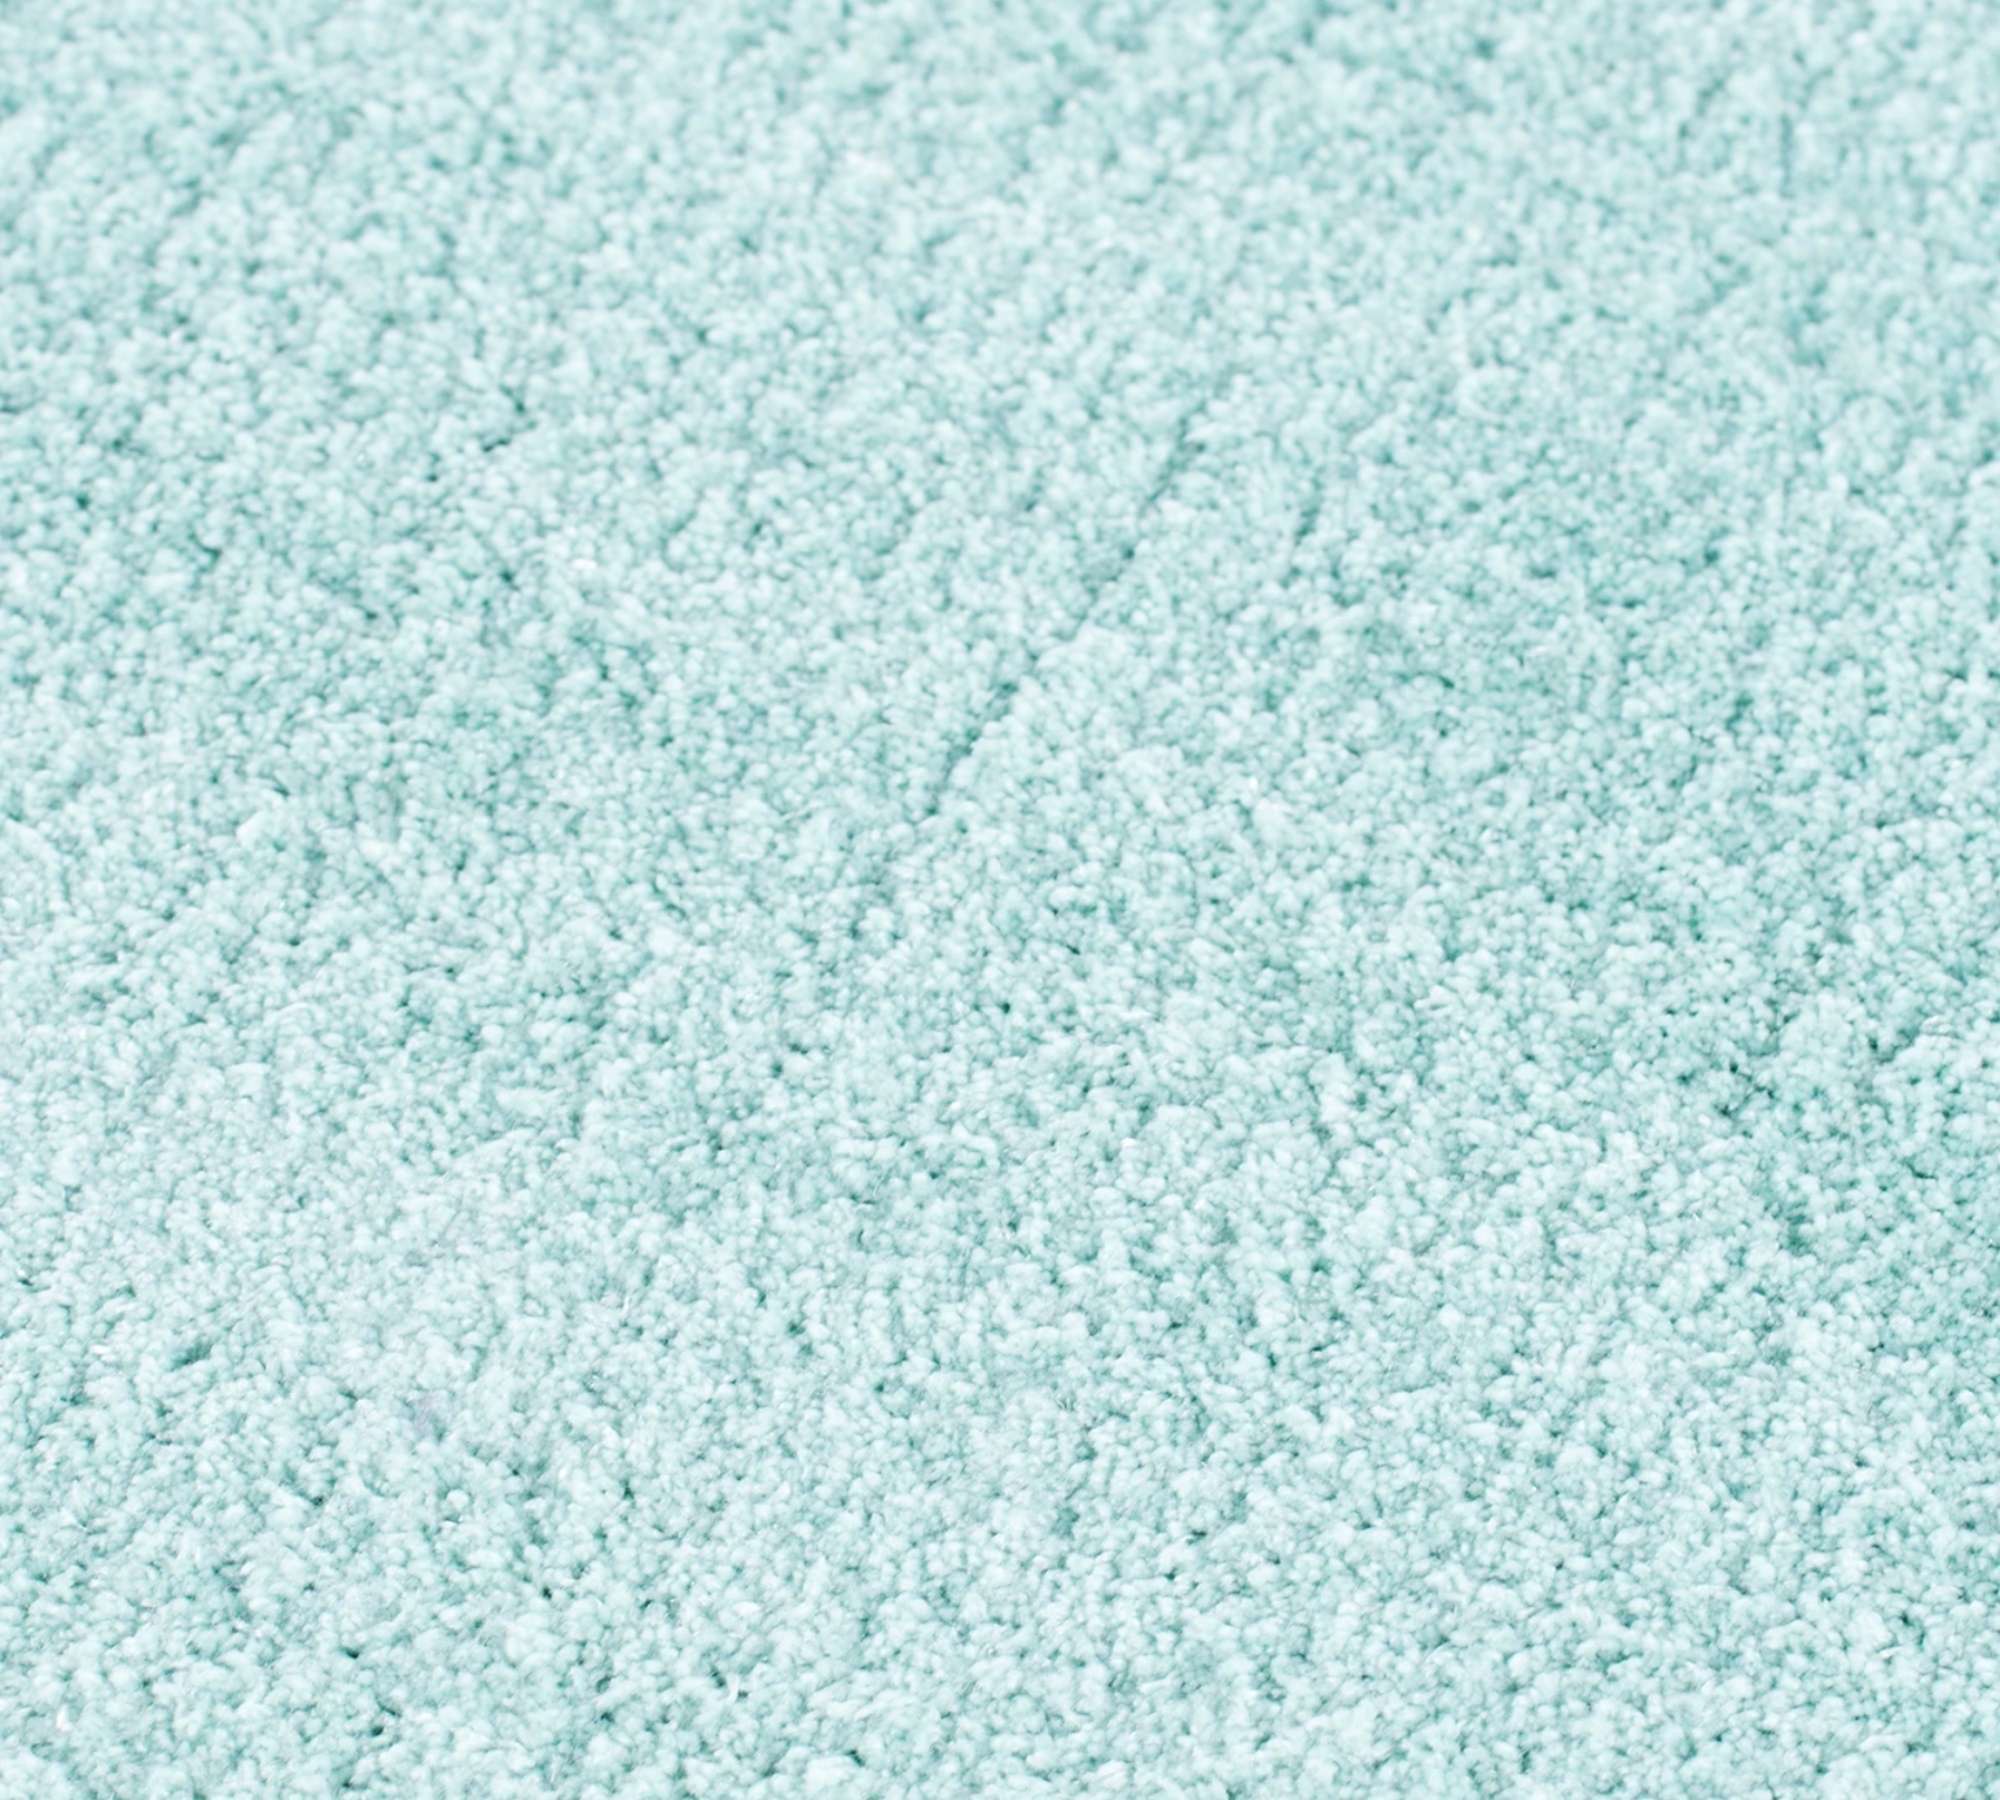 Kurzflorteppich Babyblau 140 x 200 cm 2